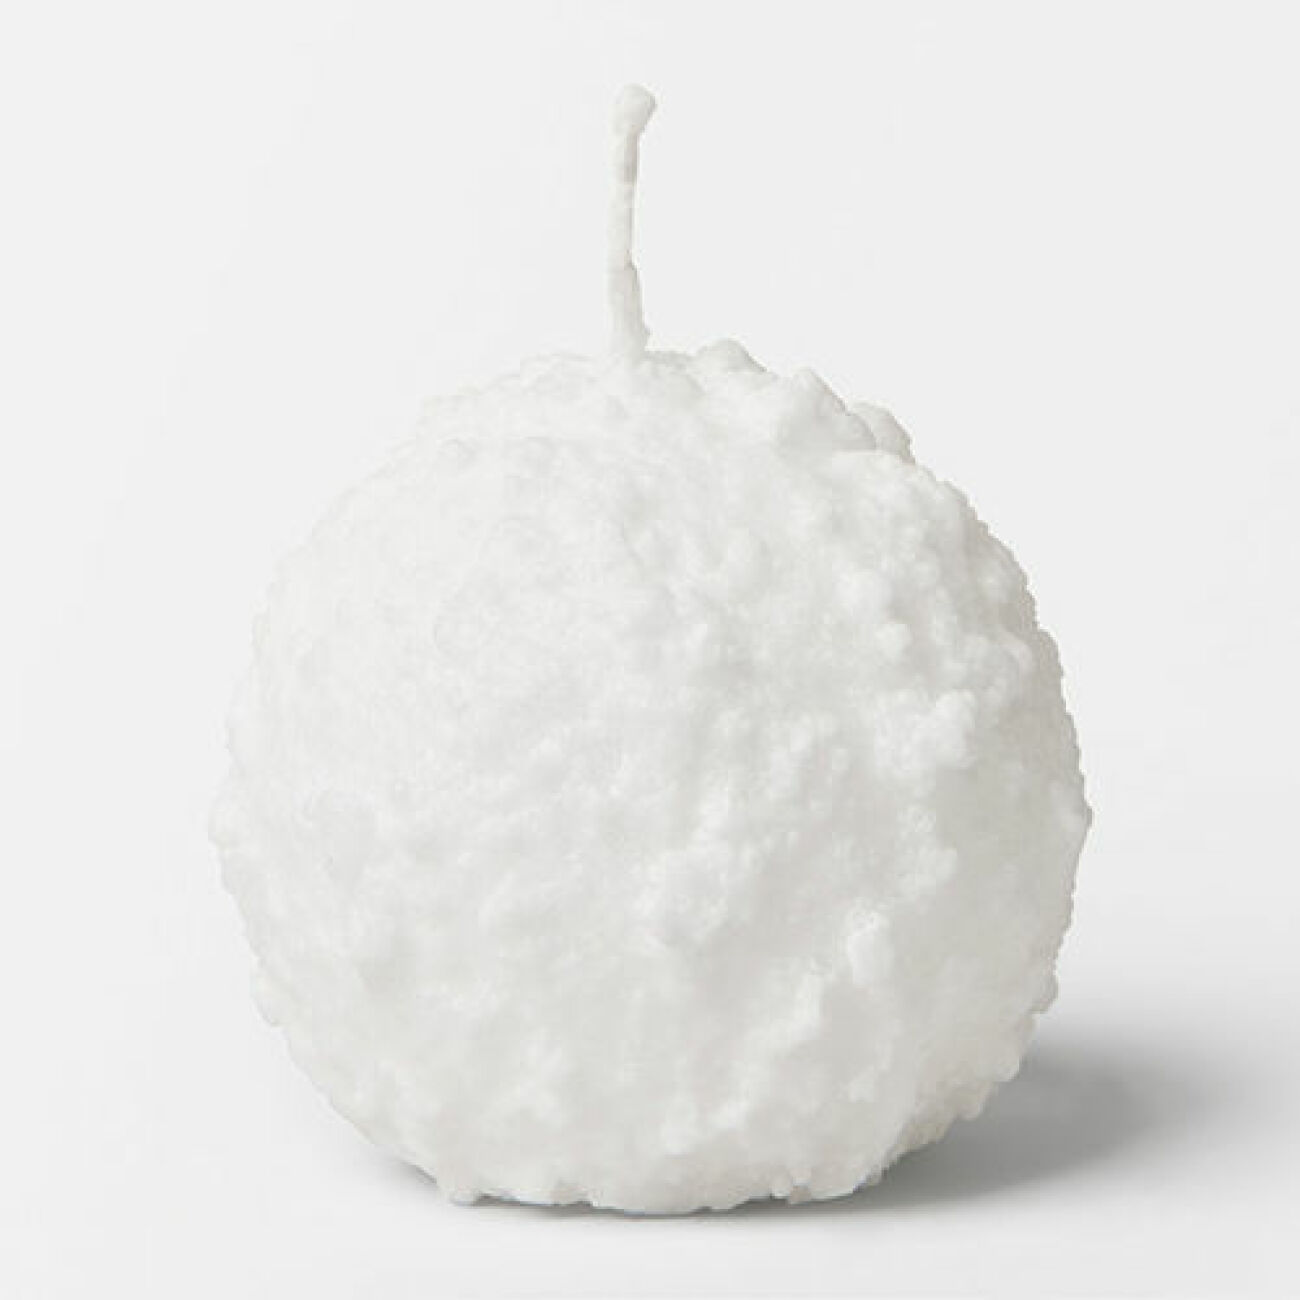 Ljus snöboll från Åhléns